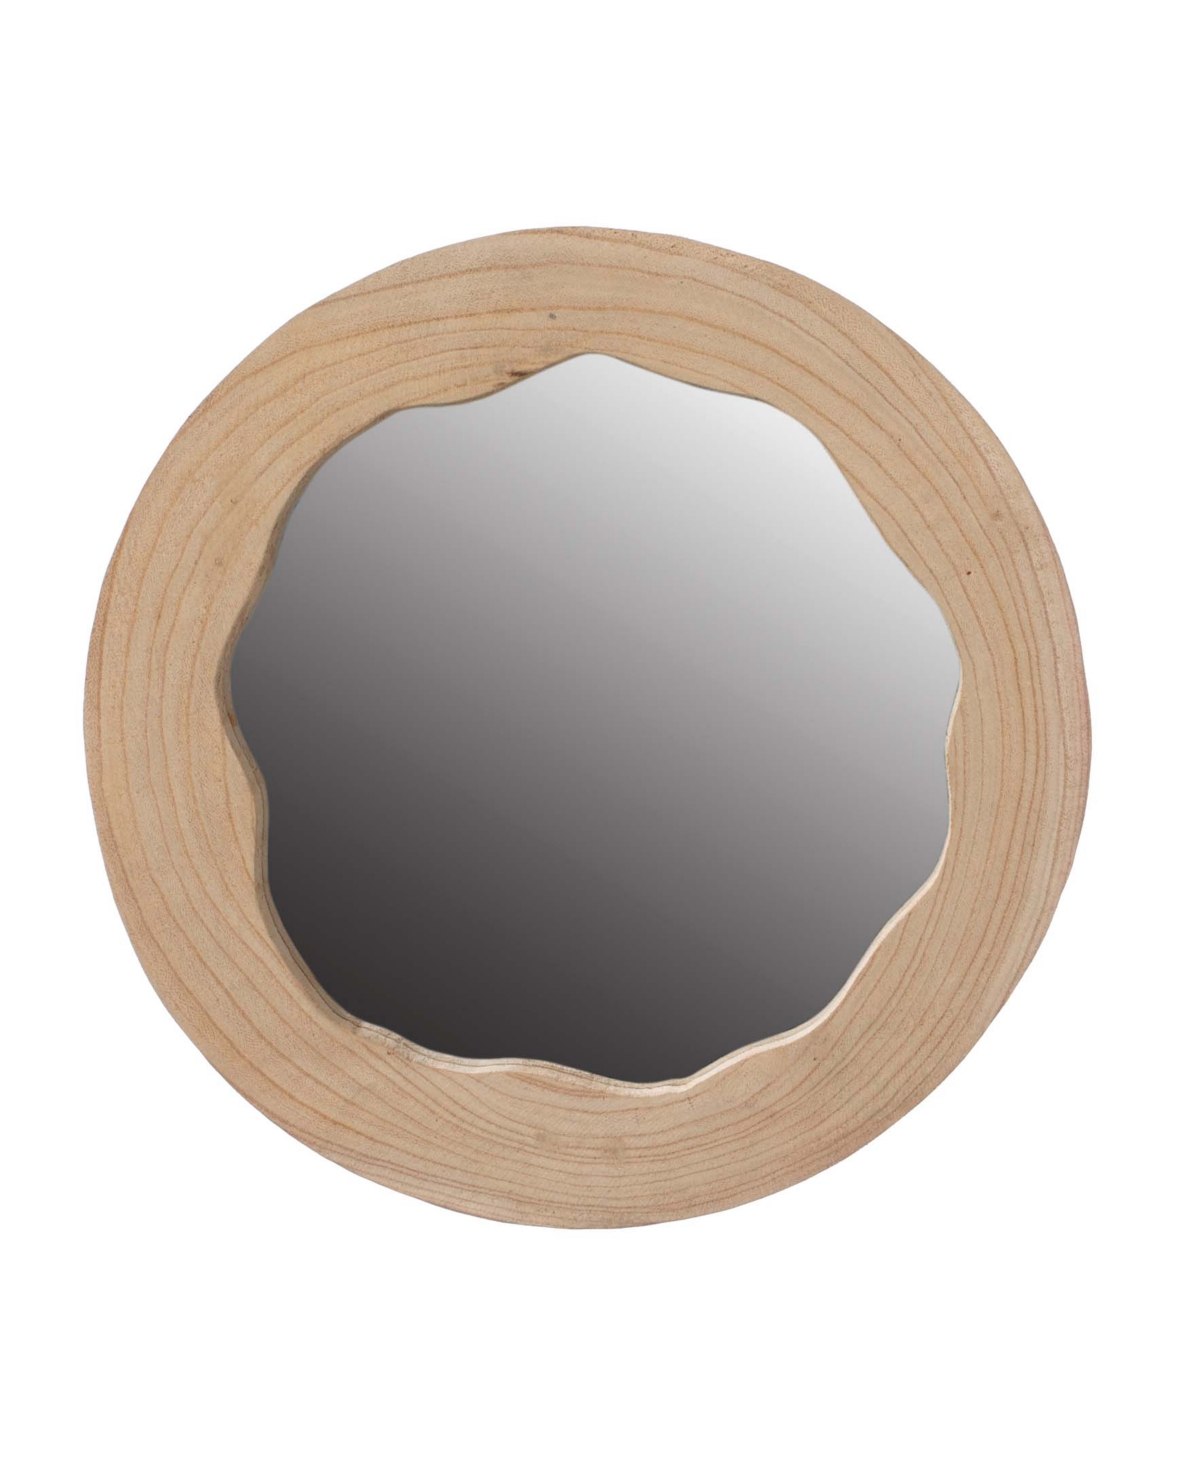 Decorative Round Wall Mirror - Natural